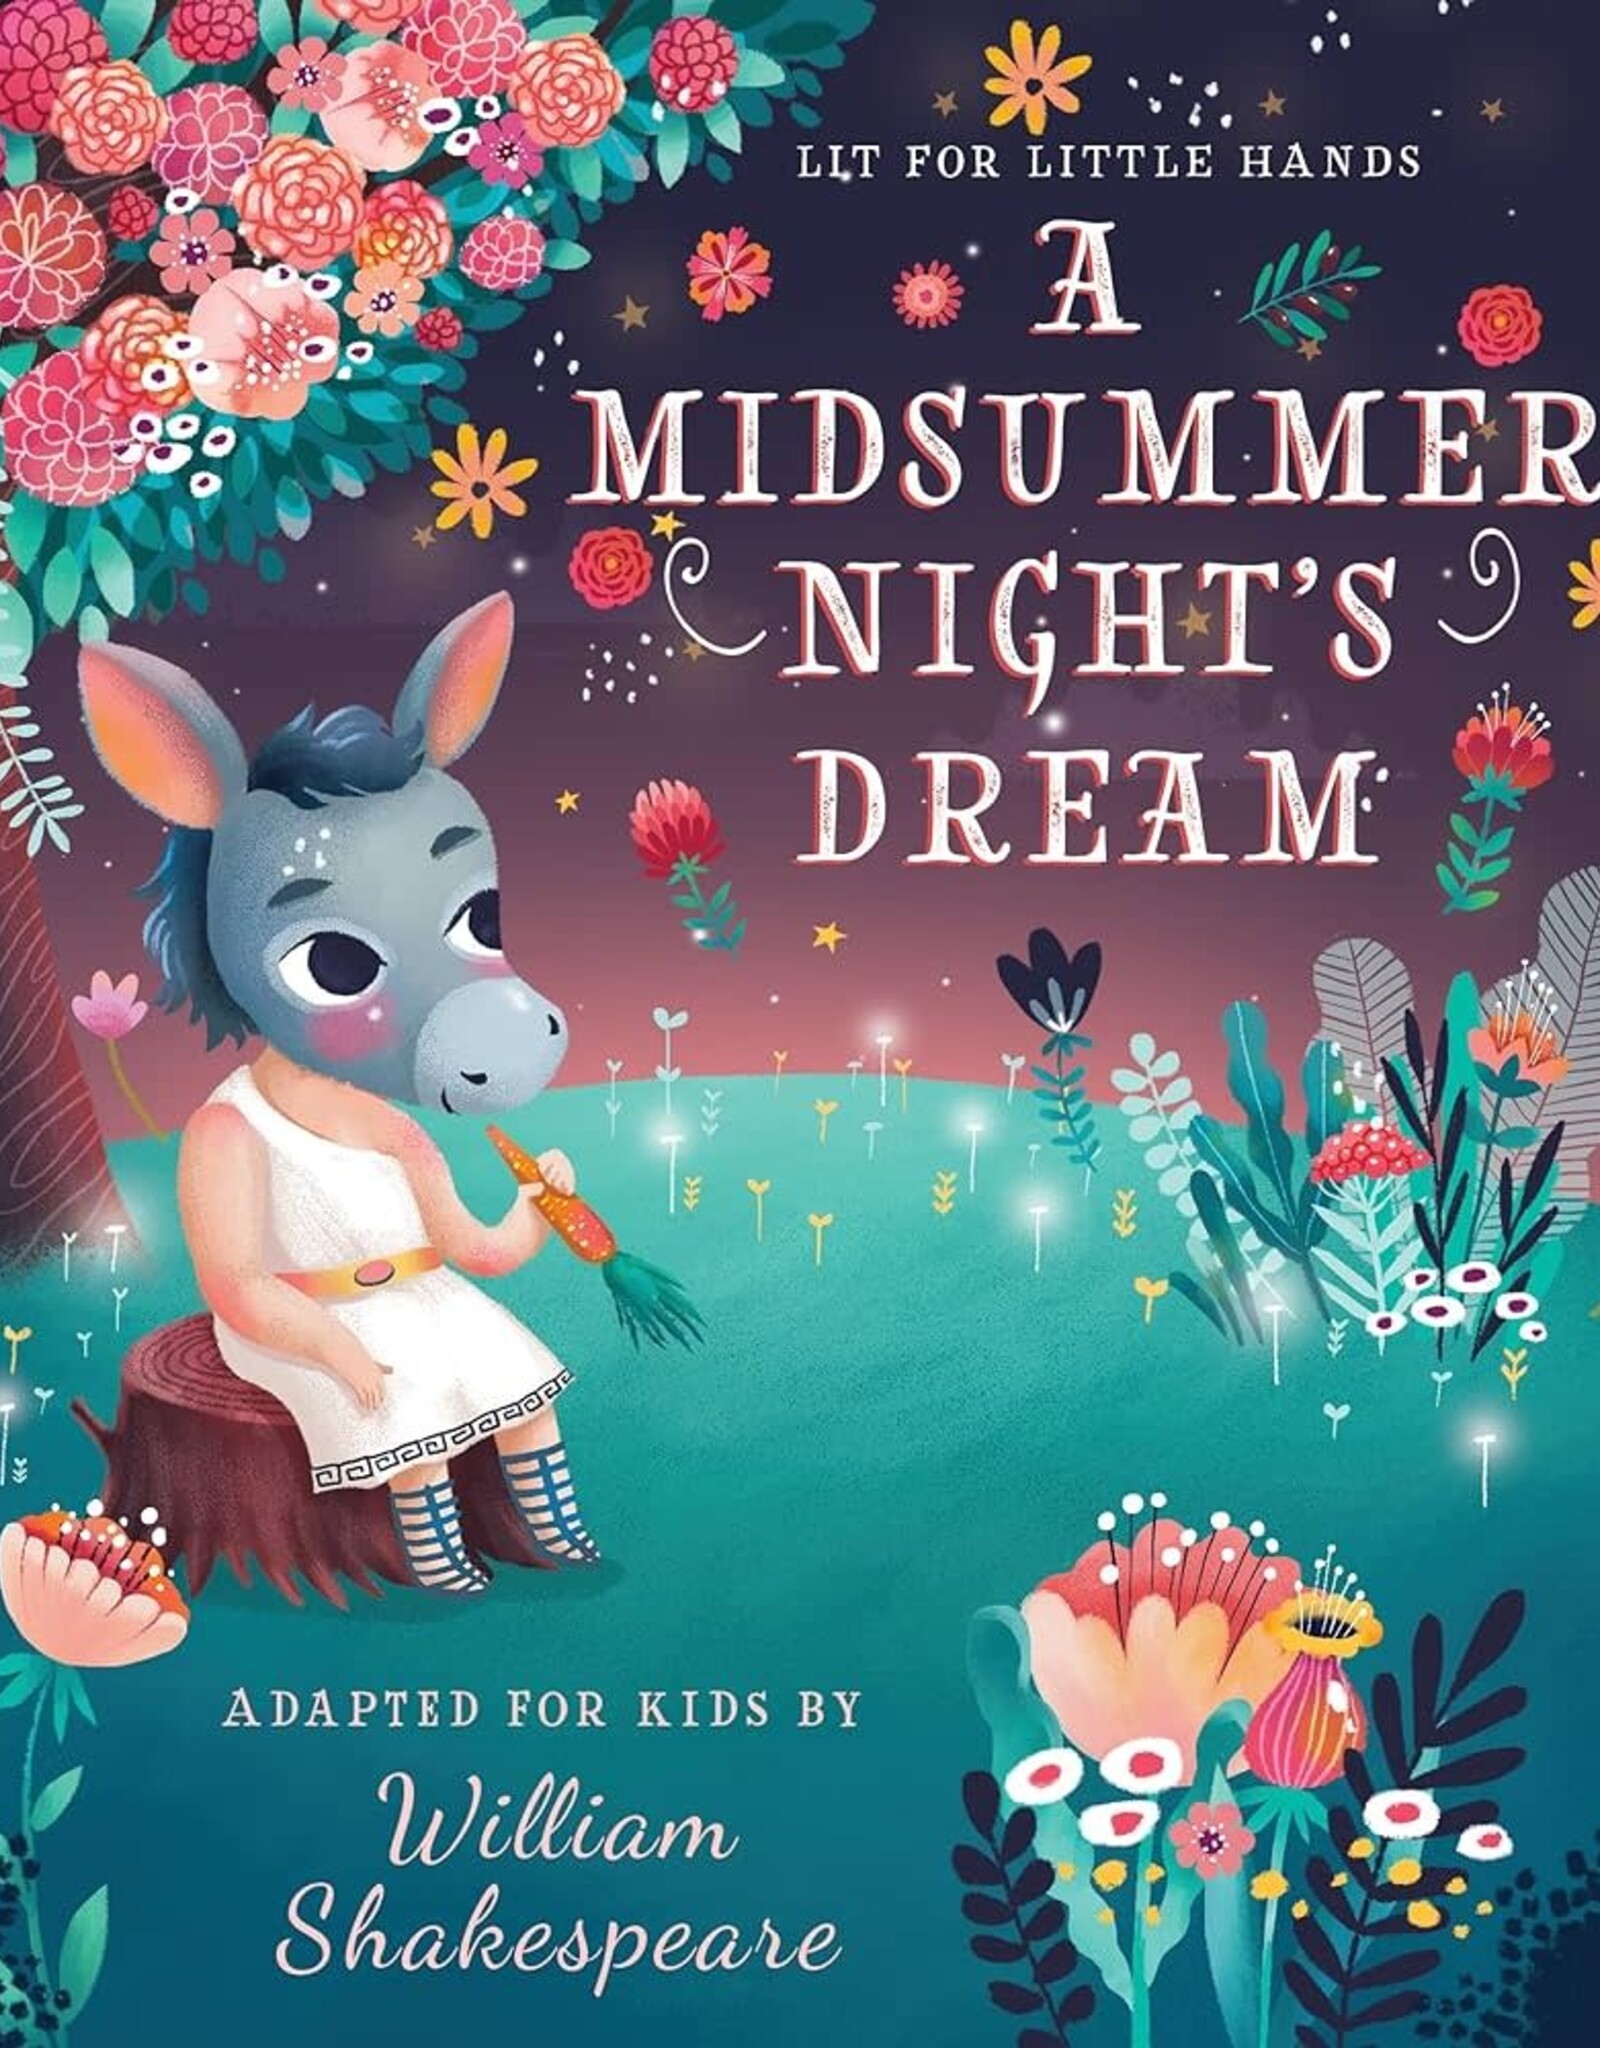 BOOK PUBLISHERS A MIDSUMMER NIGHT'S DREAM